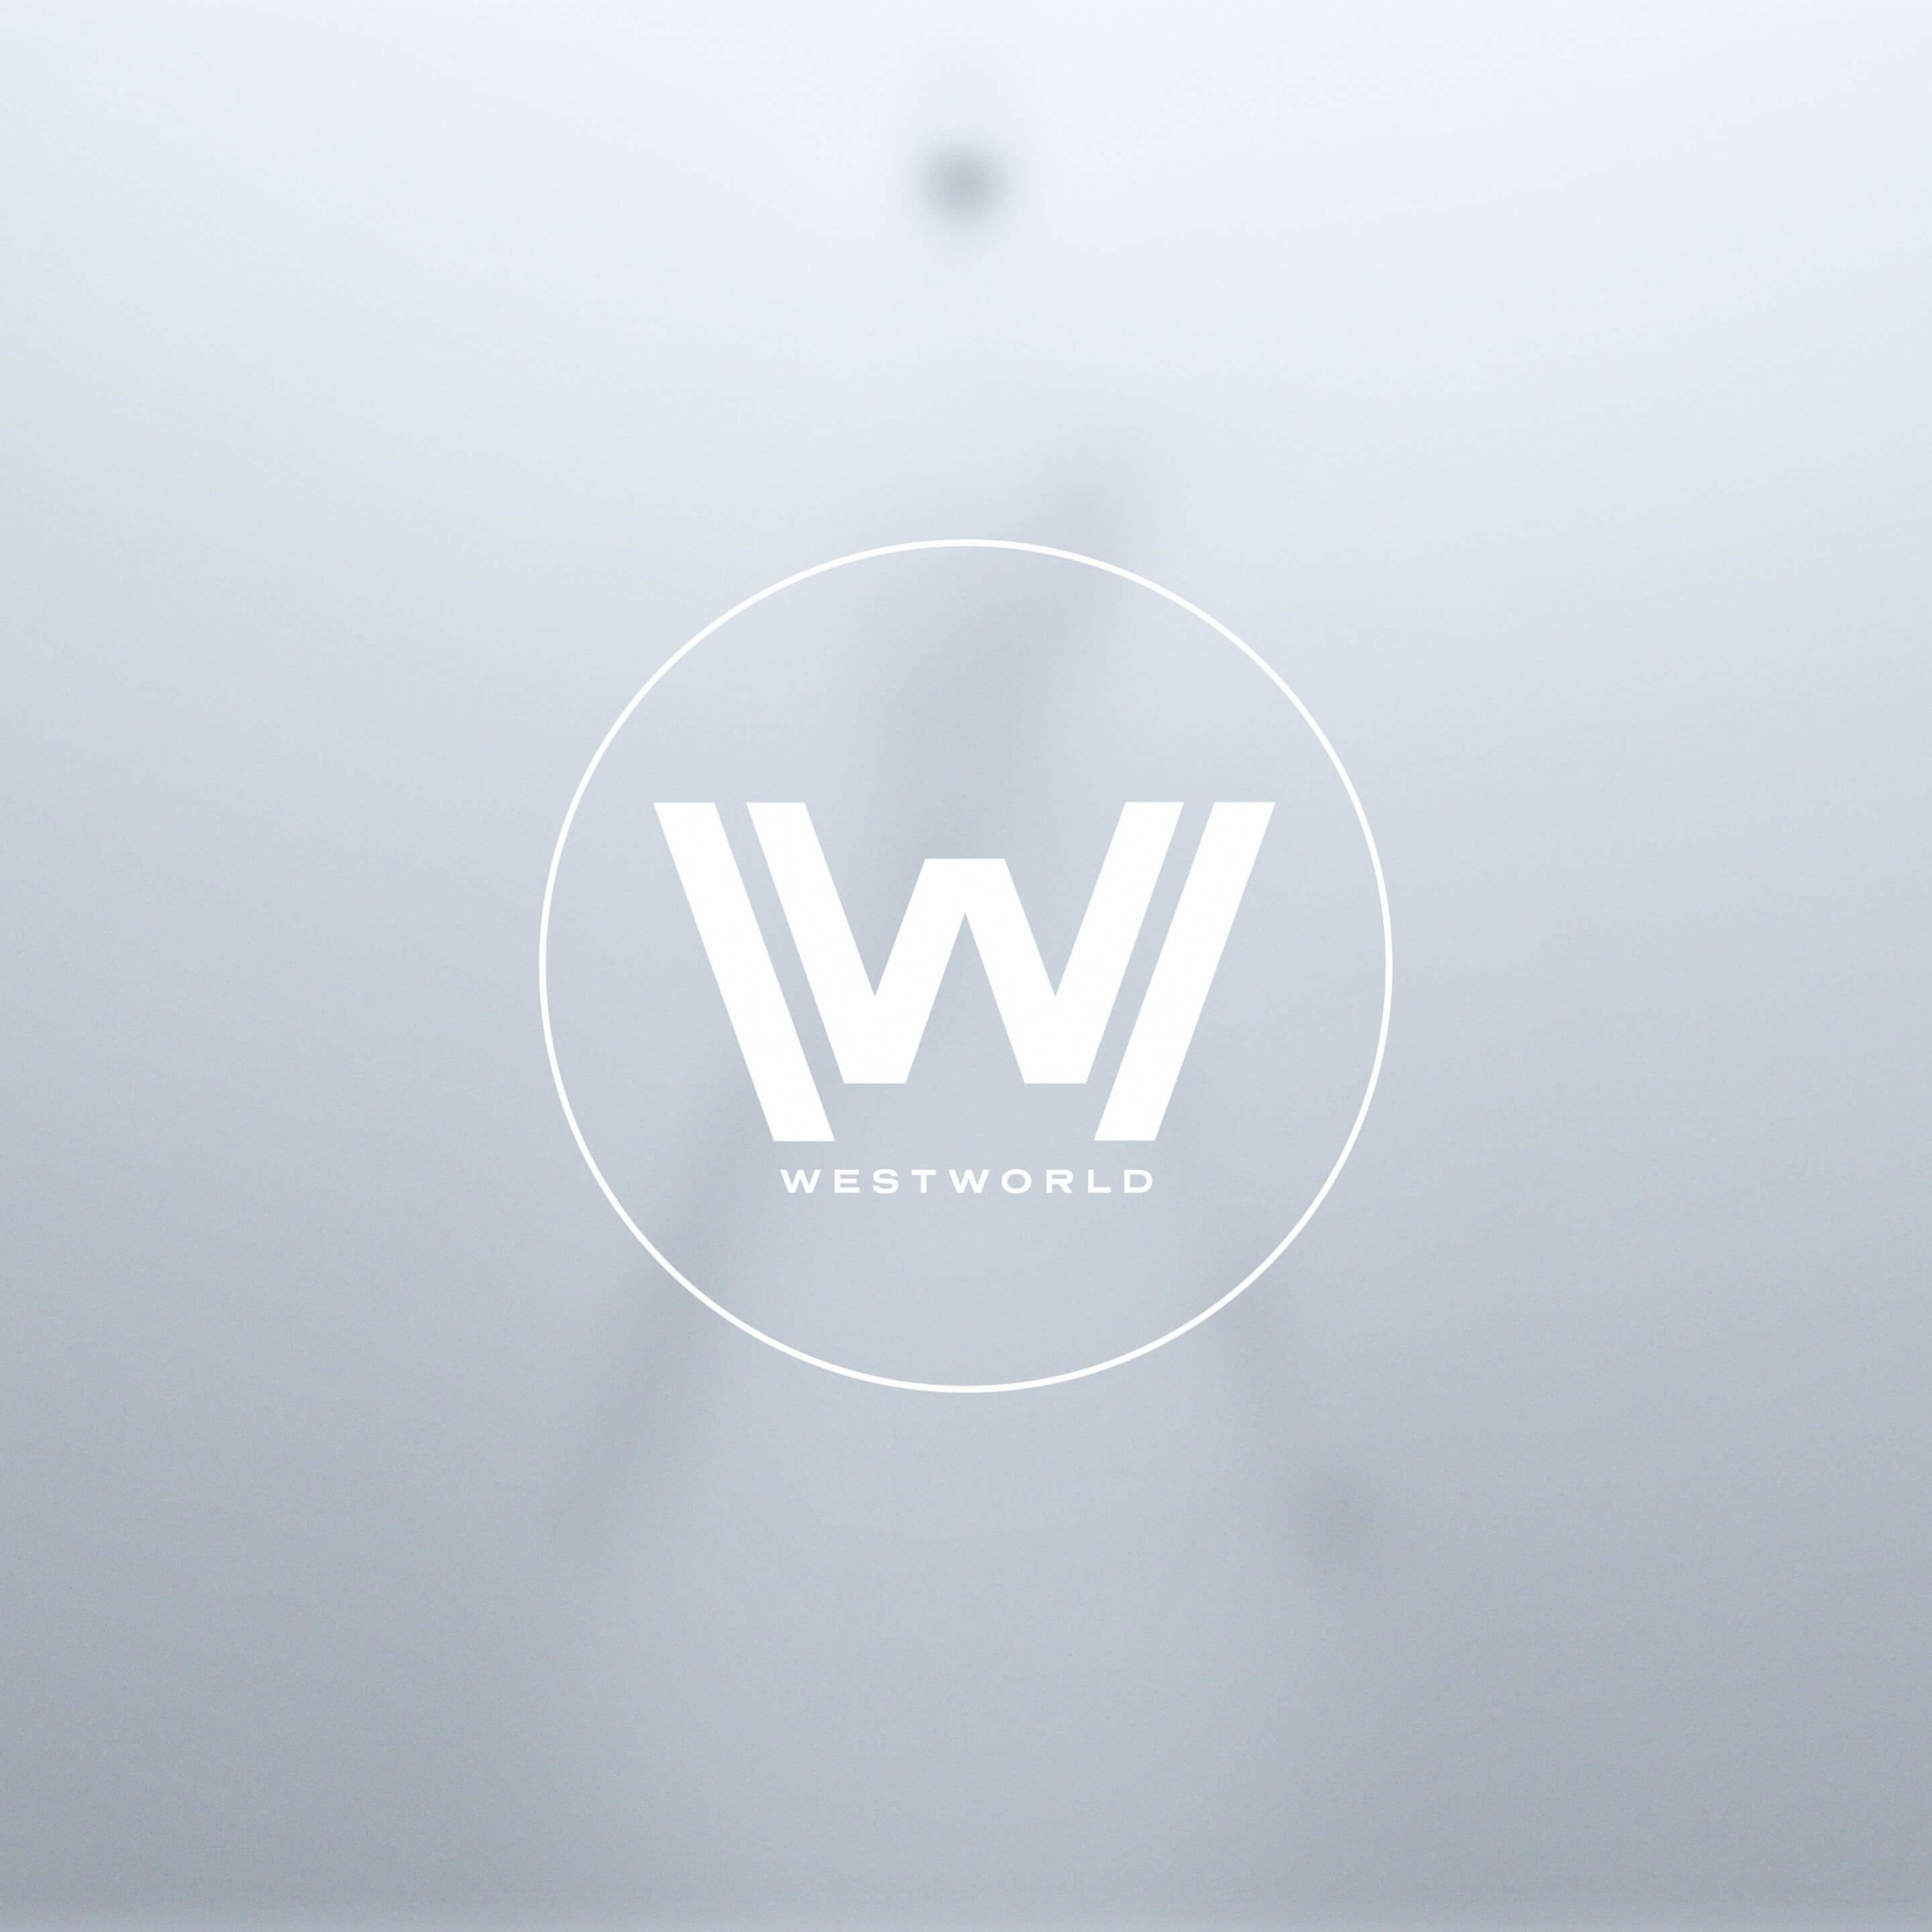 Westworld Logo Wallpaper for Apple iPhone 6 Plus